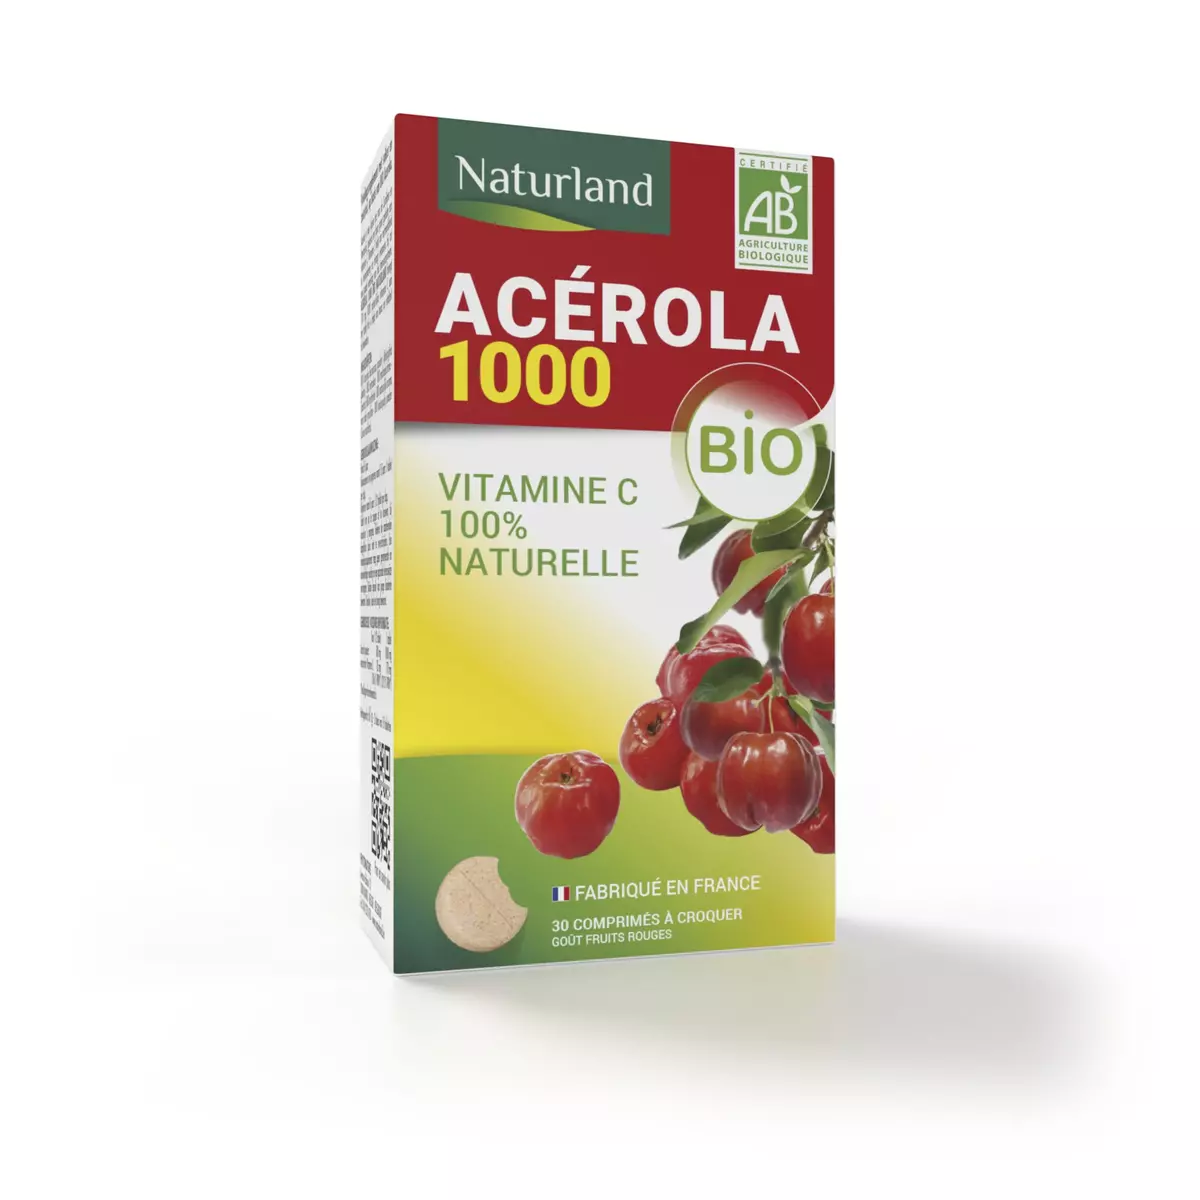 NATURLAND Acérola 1000 vitamines C 100% naturelle BIO 30 comprimés 61g